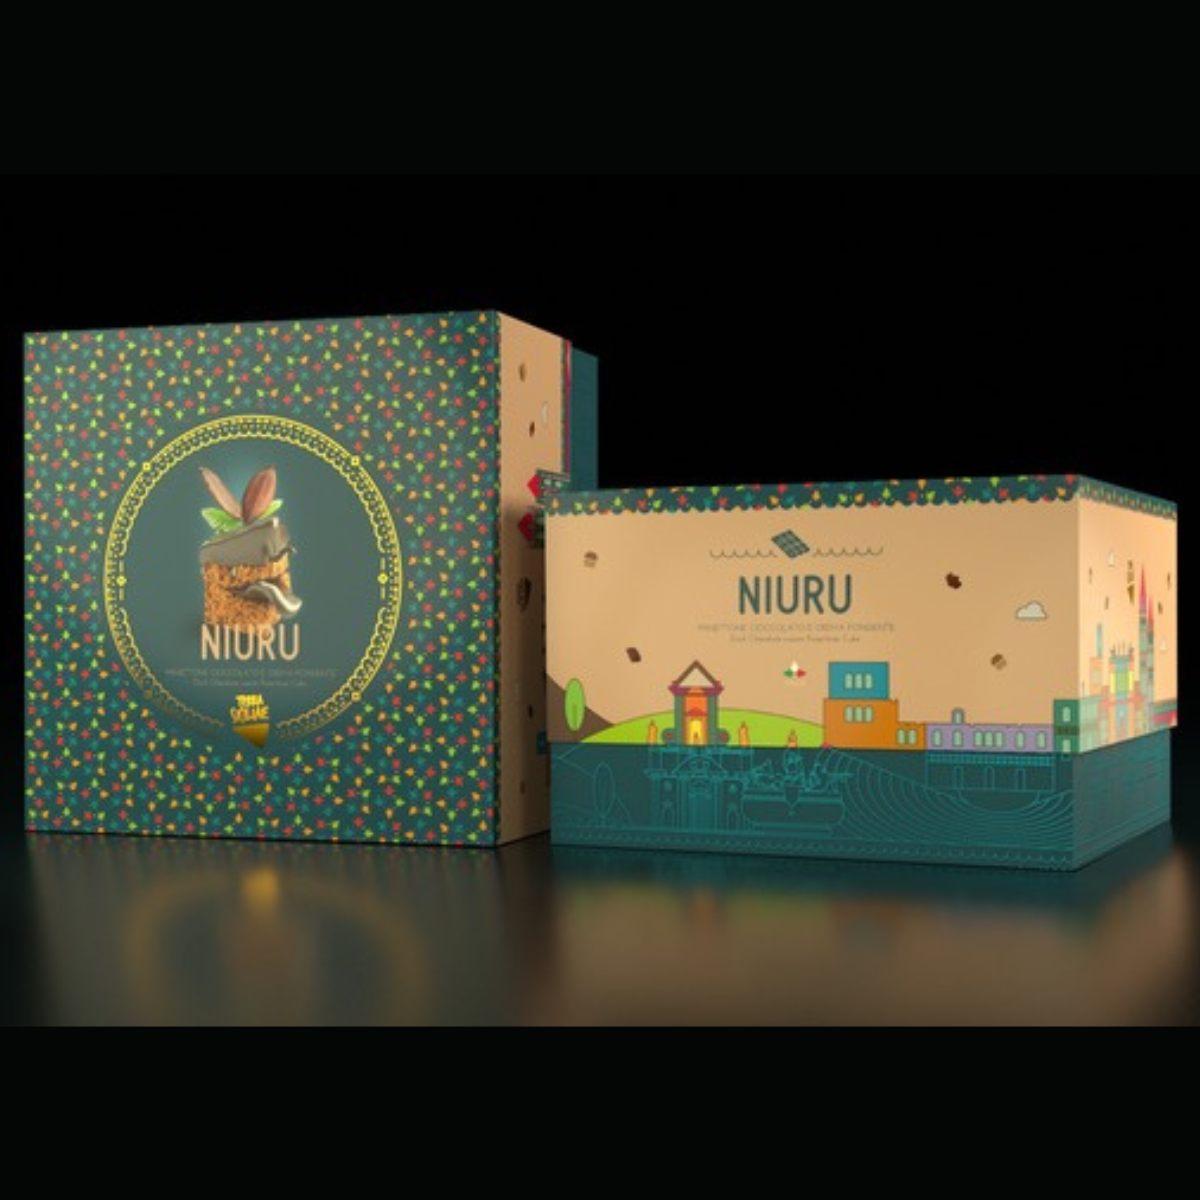 NIURU - Panettone Artigianale al Cacao e Crema Cioccolato Fondente, 1000 g